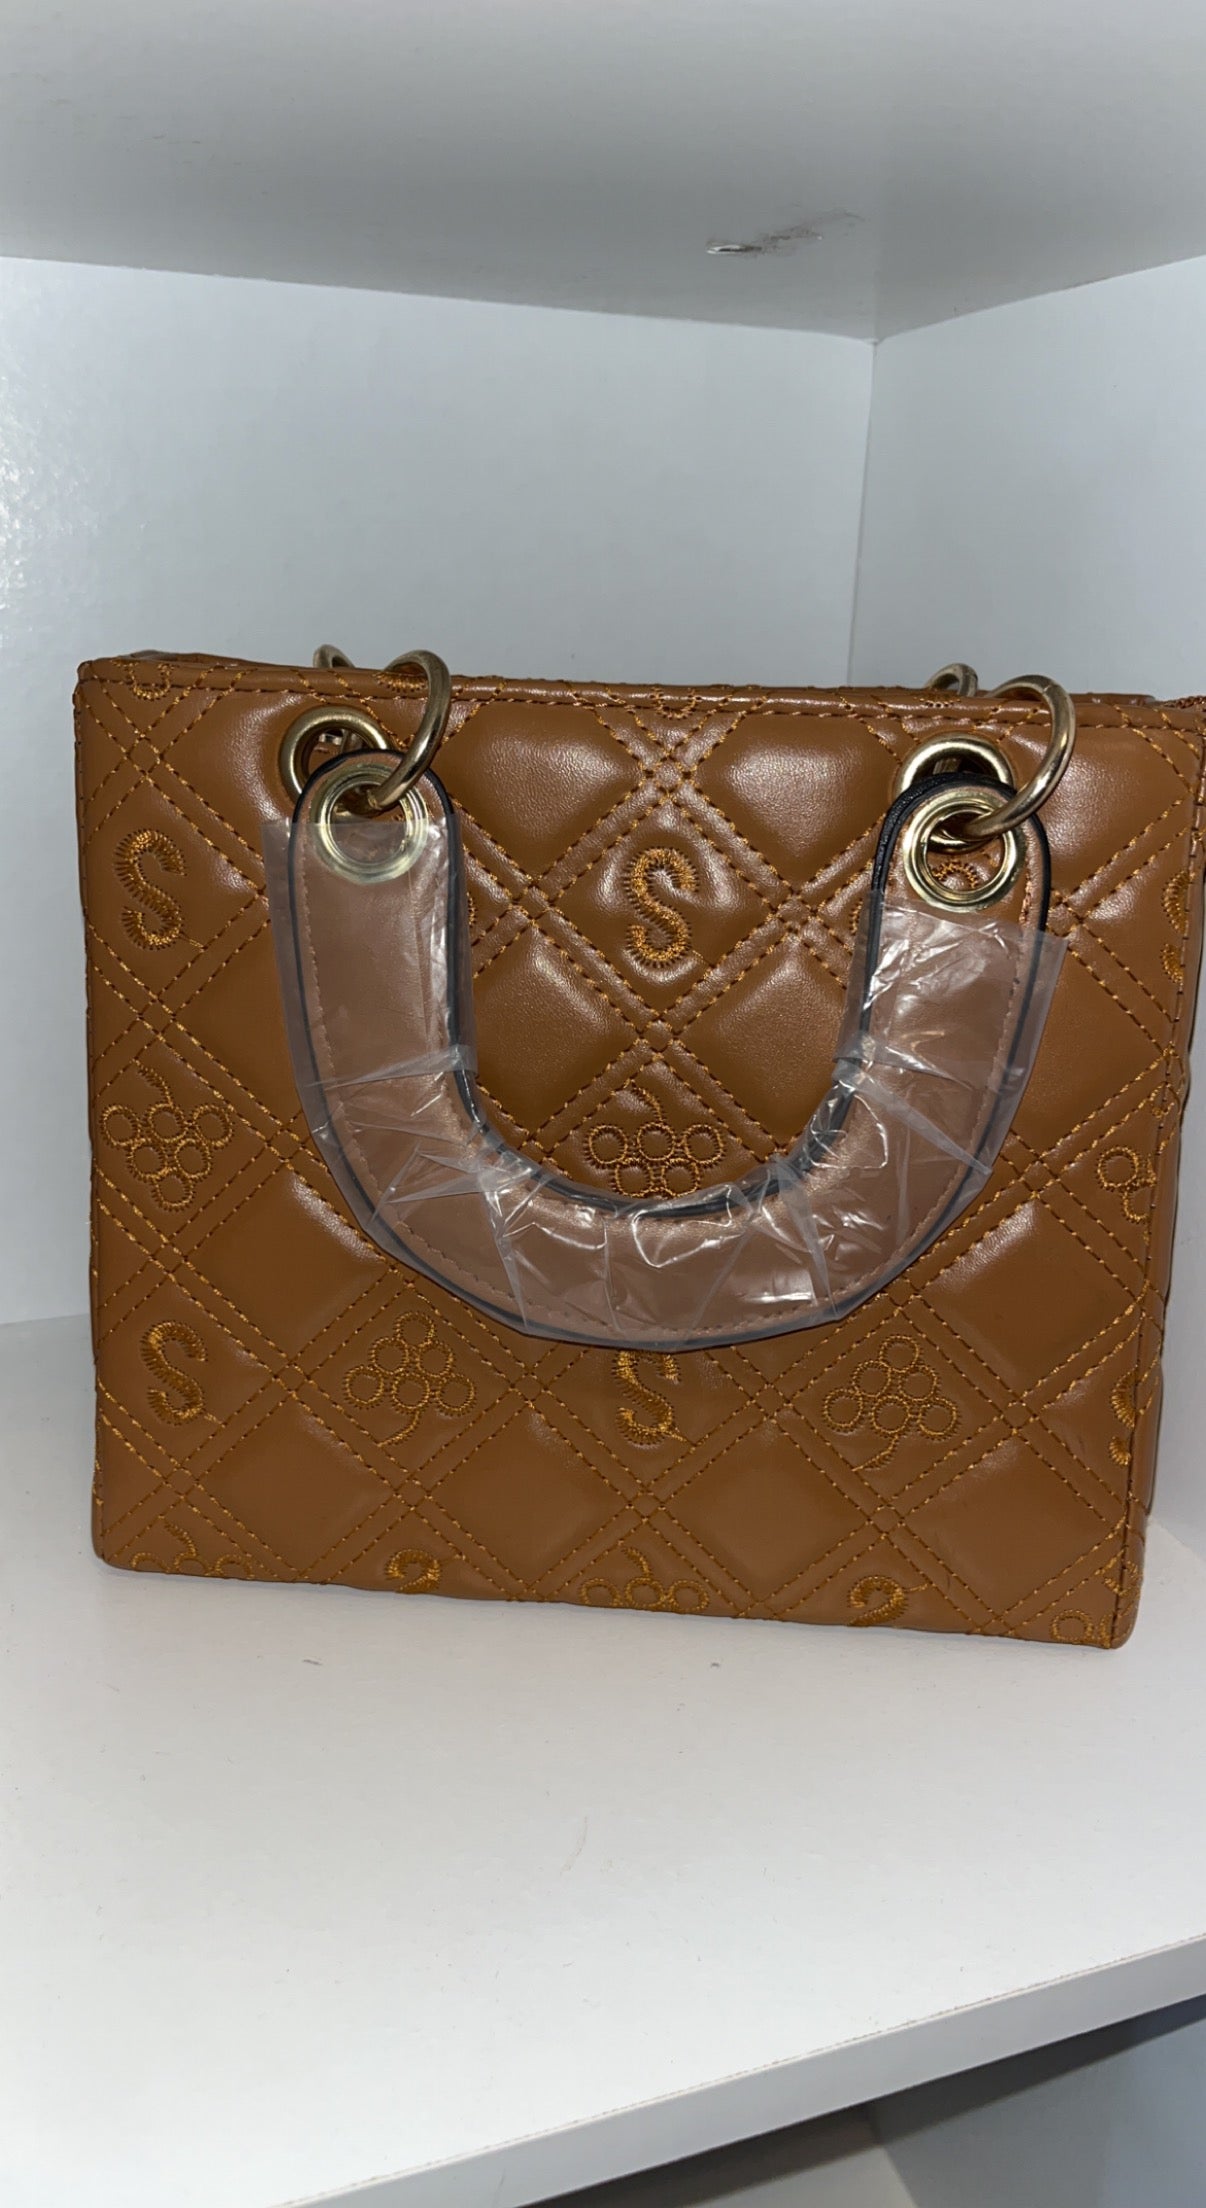 Foxy brown handbag